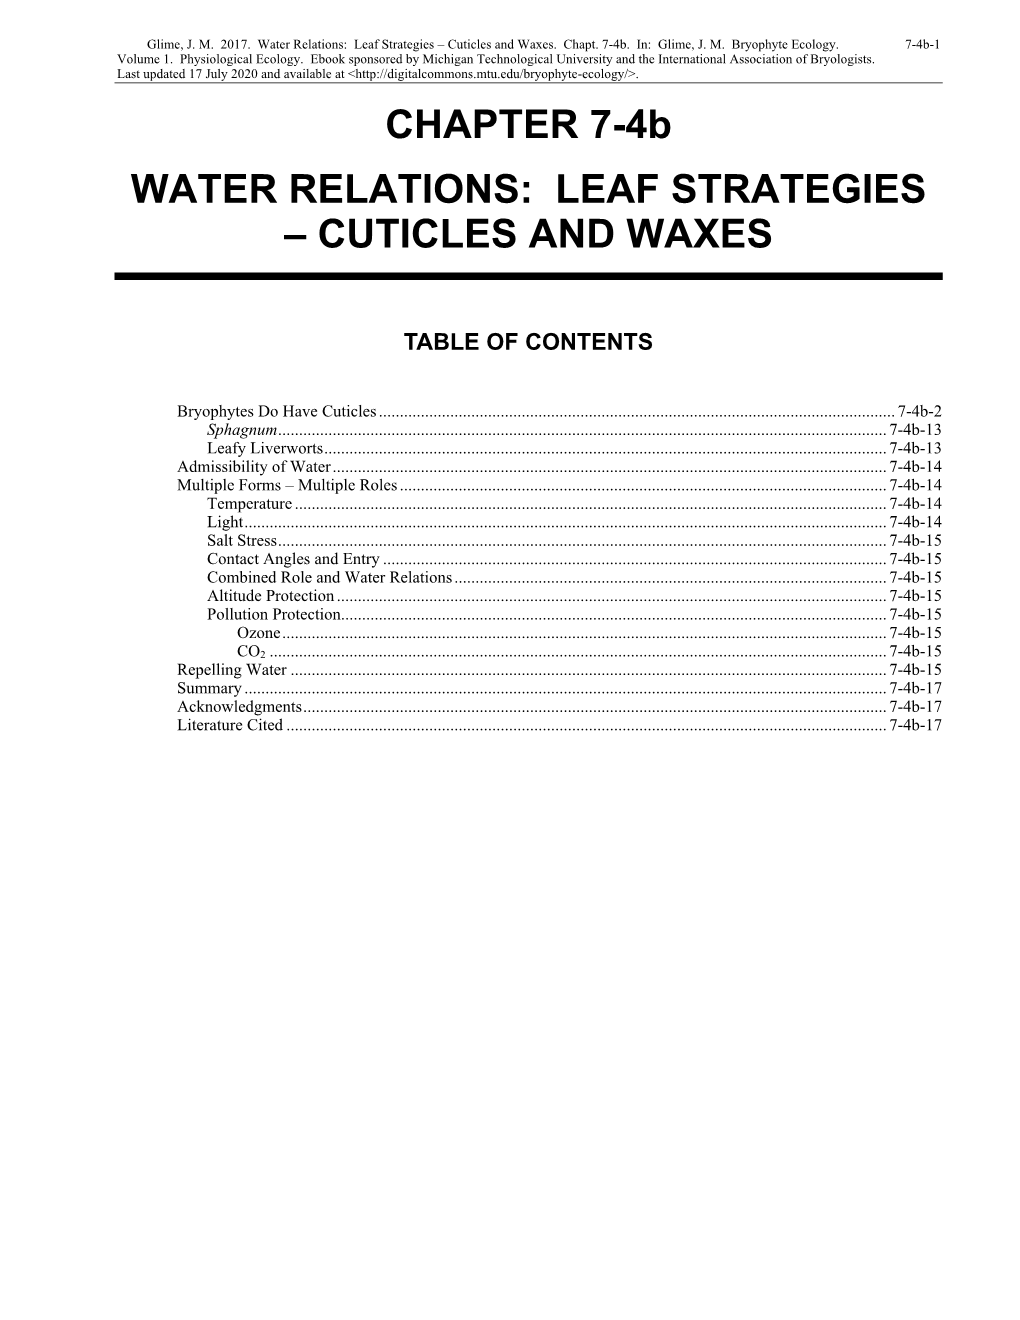 Volume 1, Chapter 7-4B: Water Relations: Leaf Strategies